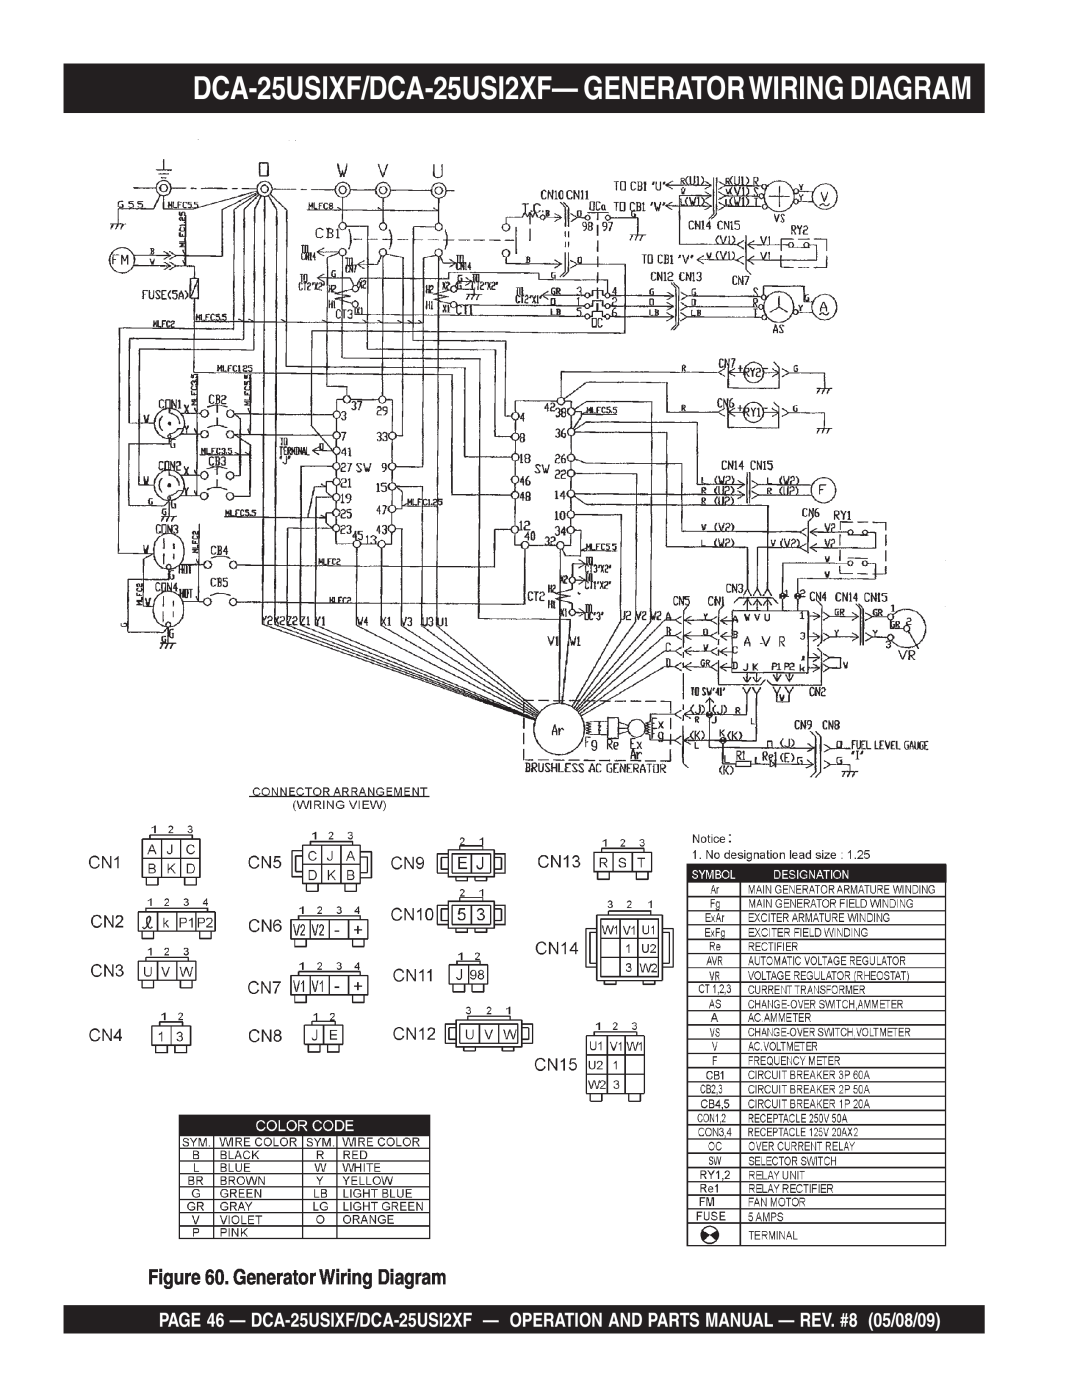 Multiquip operation manual DCA-25USIXF/DCA-25USI2XF- GENERATORWIRING DIAGRAM, Generator Wiring Diagram 